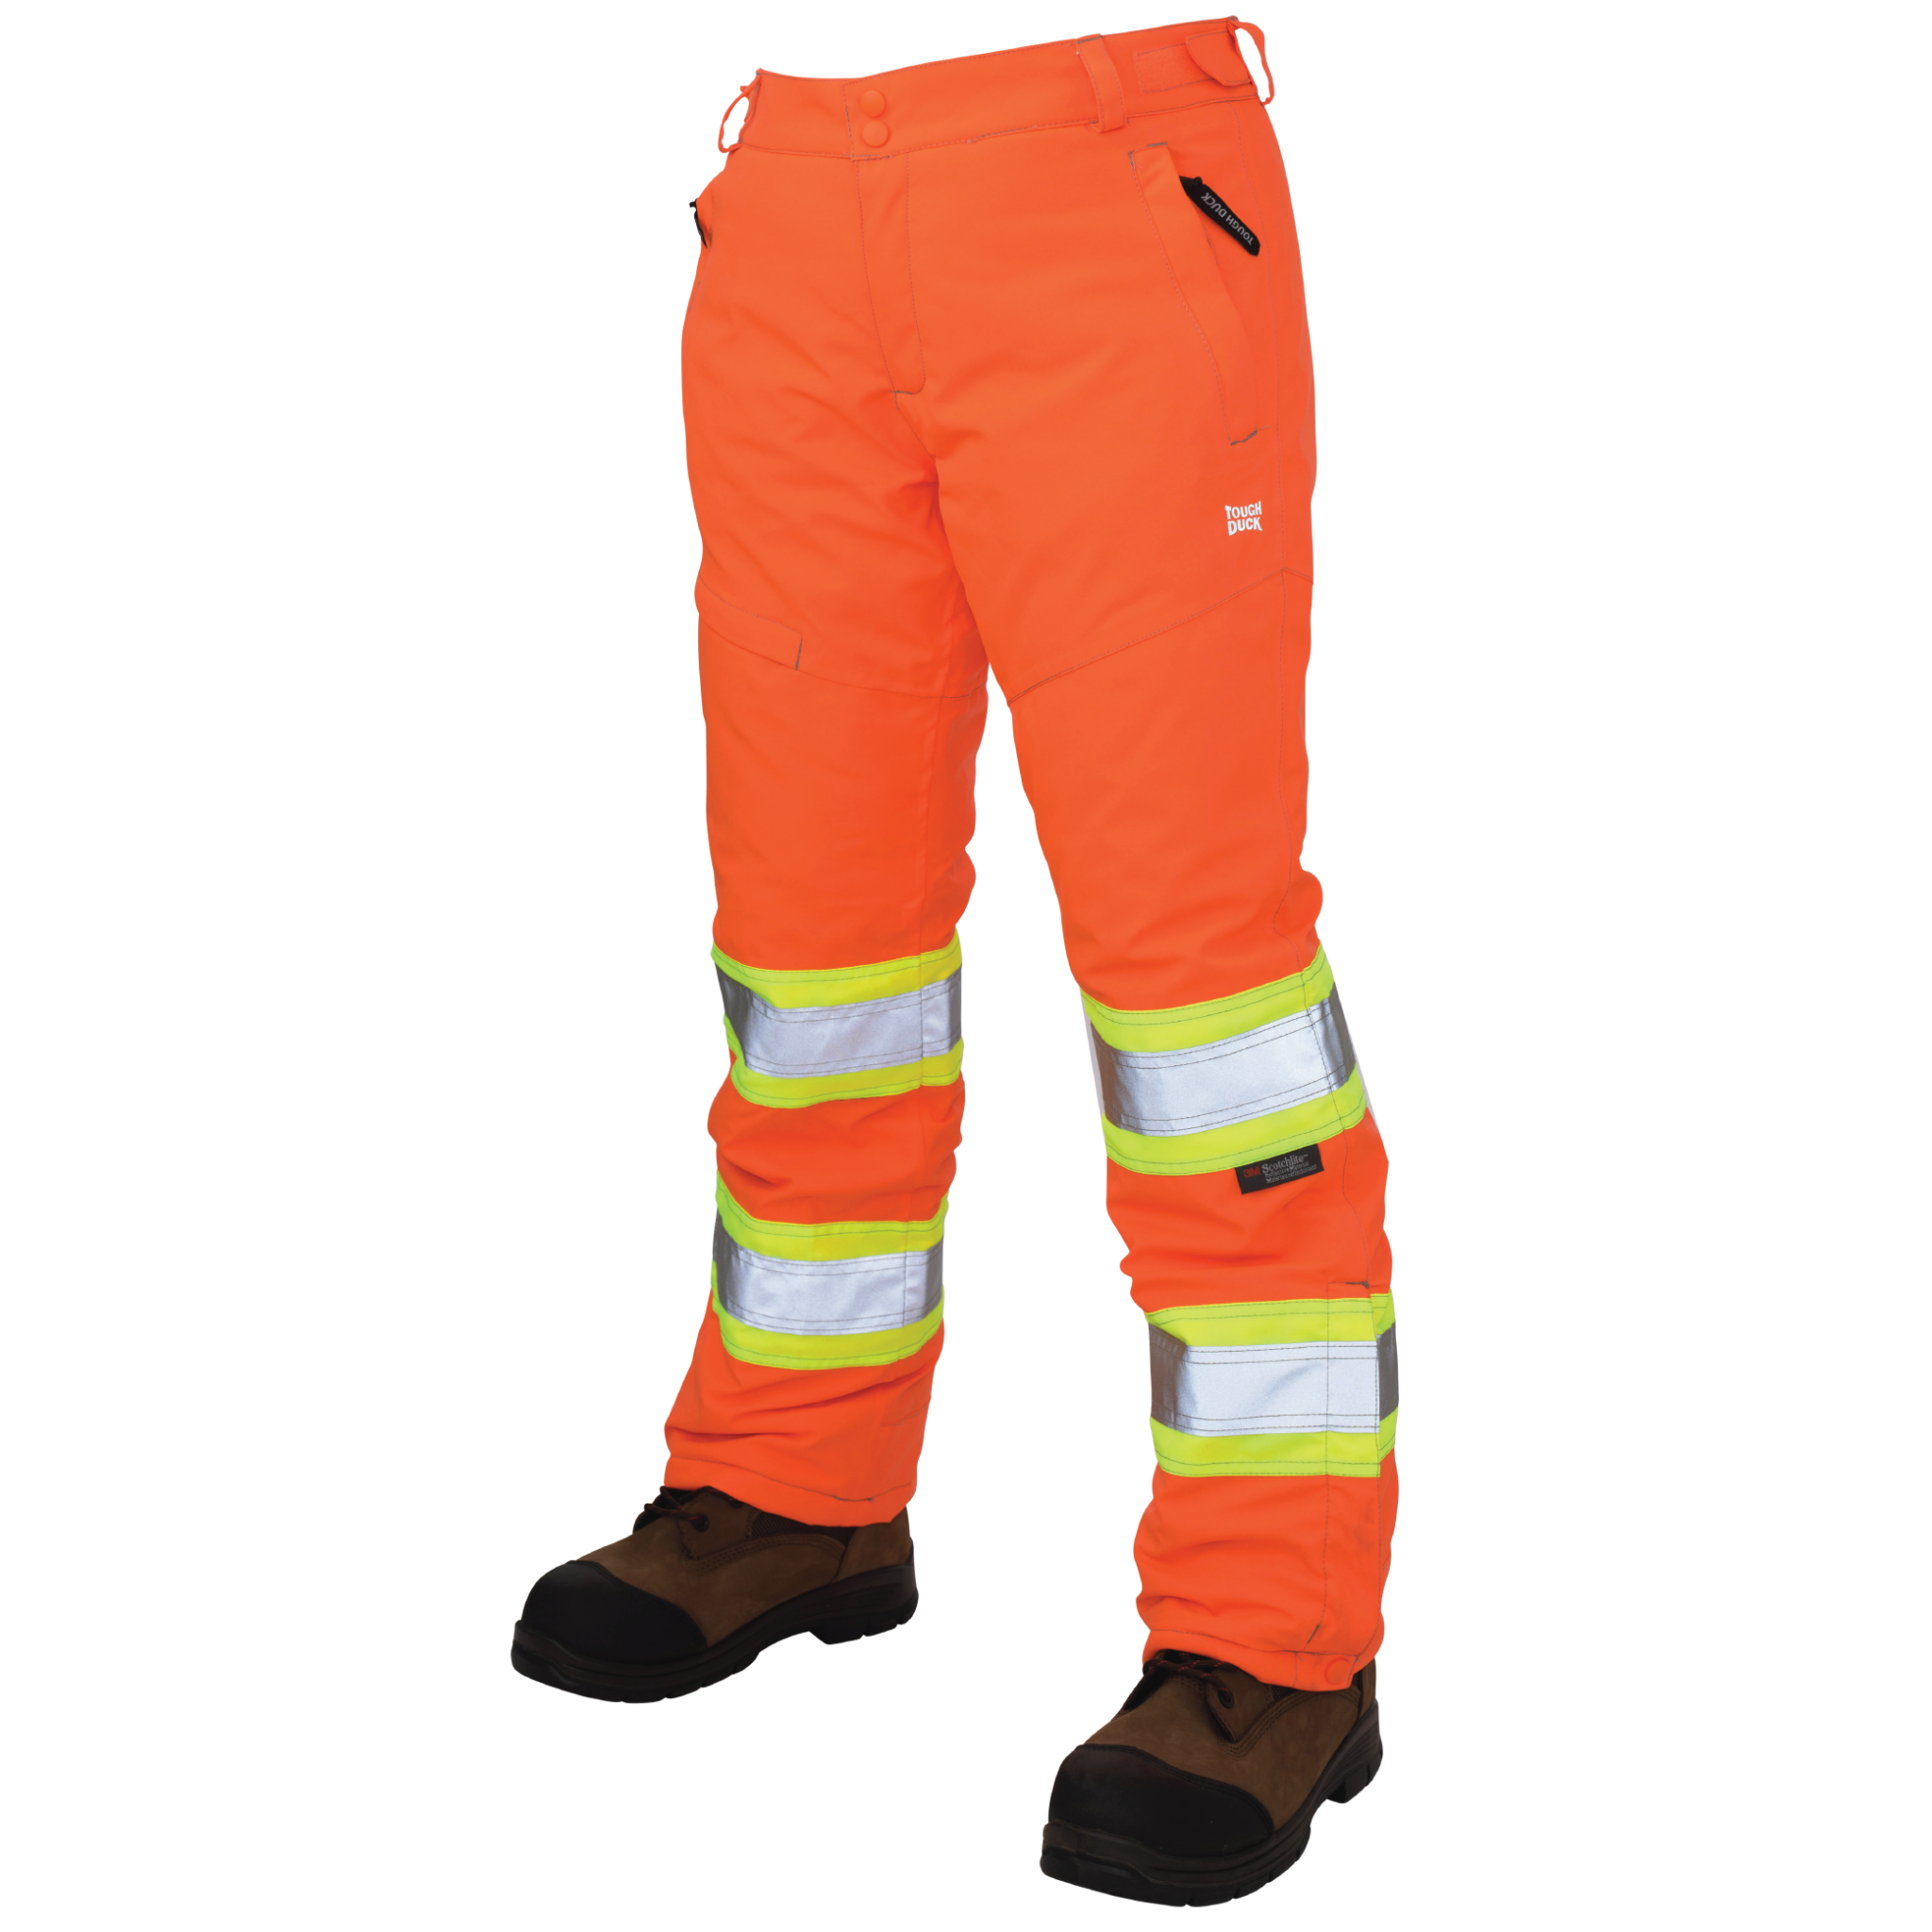 Cargo Work Pants, Hi Viz Orange, Tough Duck - 32 (Select Size to